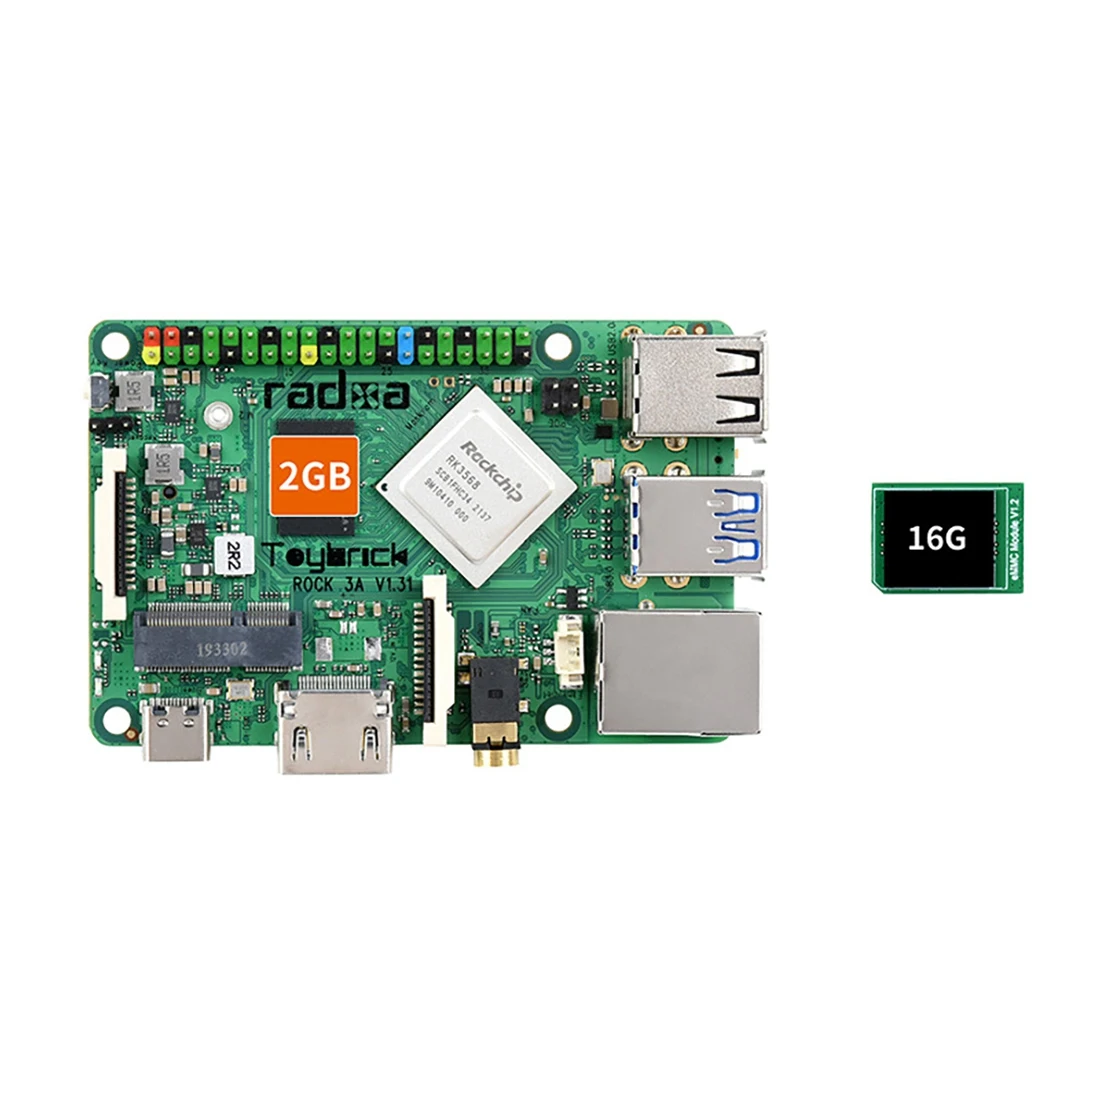 ROCK3 Model a Card Computer SBC Motherboard Module Based on RK3568 Cortex-A55 2GB RAM Development Board with 16GB EMMC